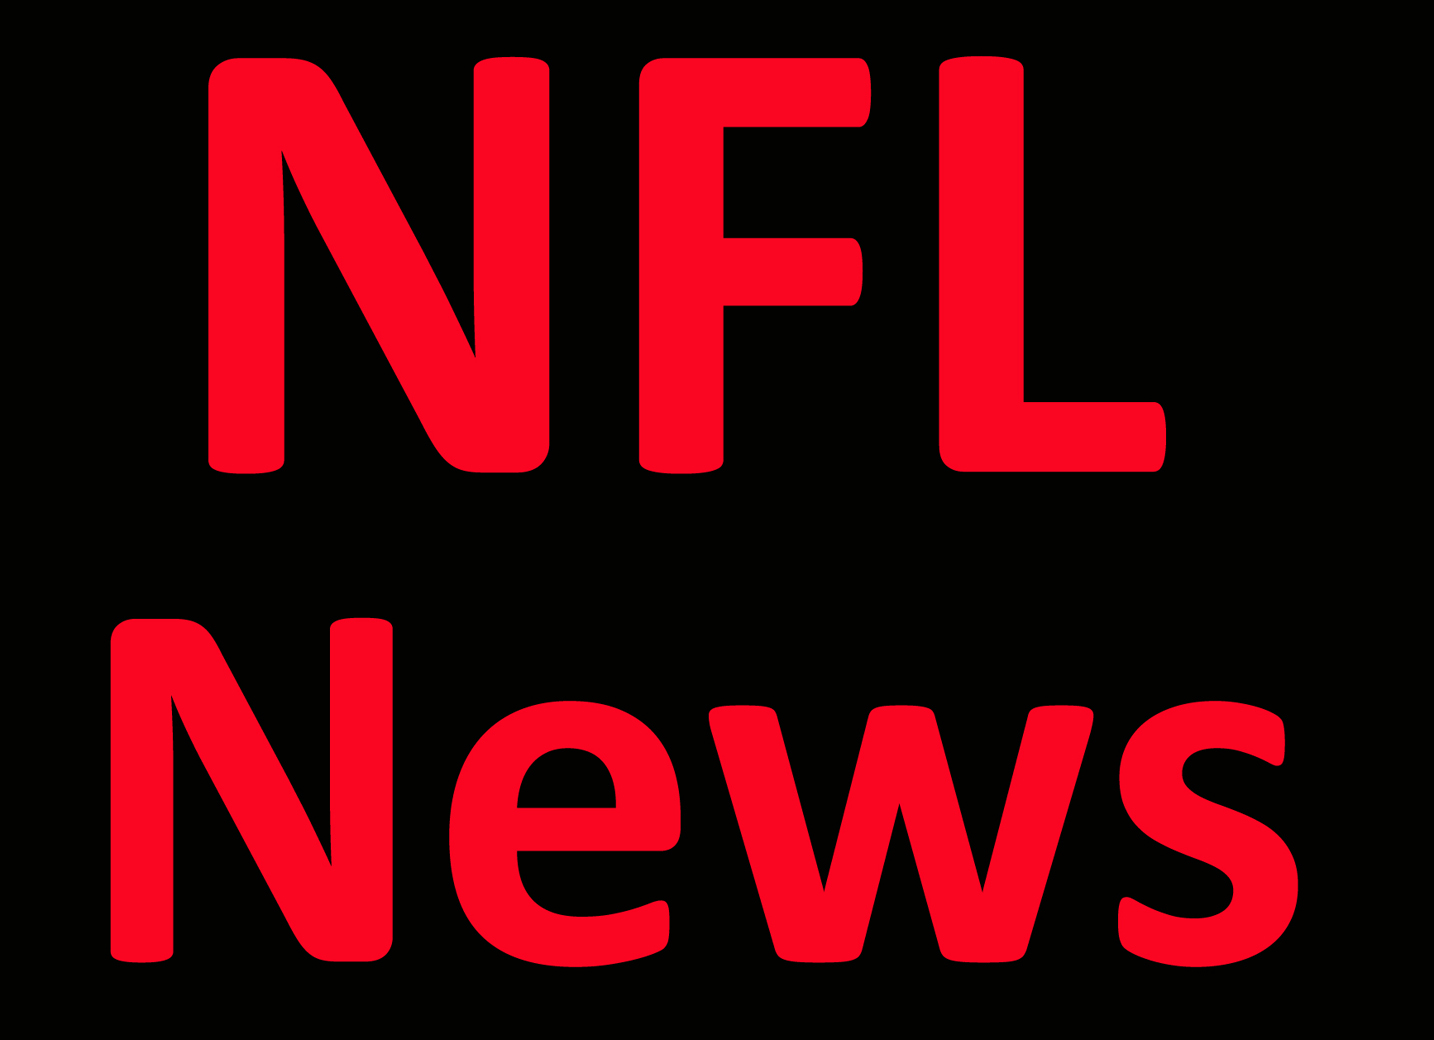 NFL News: Source: Lamar OK to play after illness Thursday Per Report